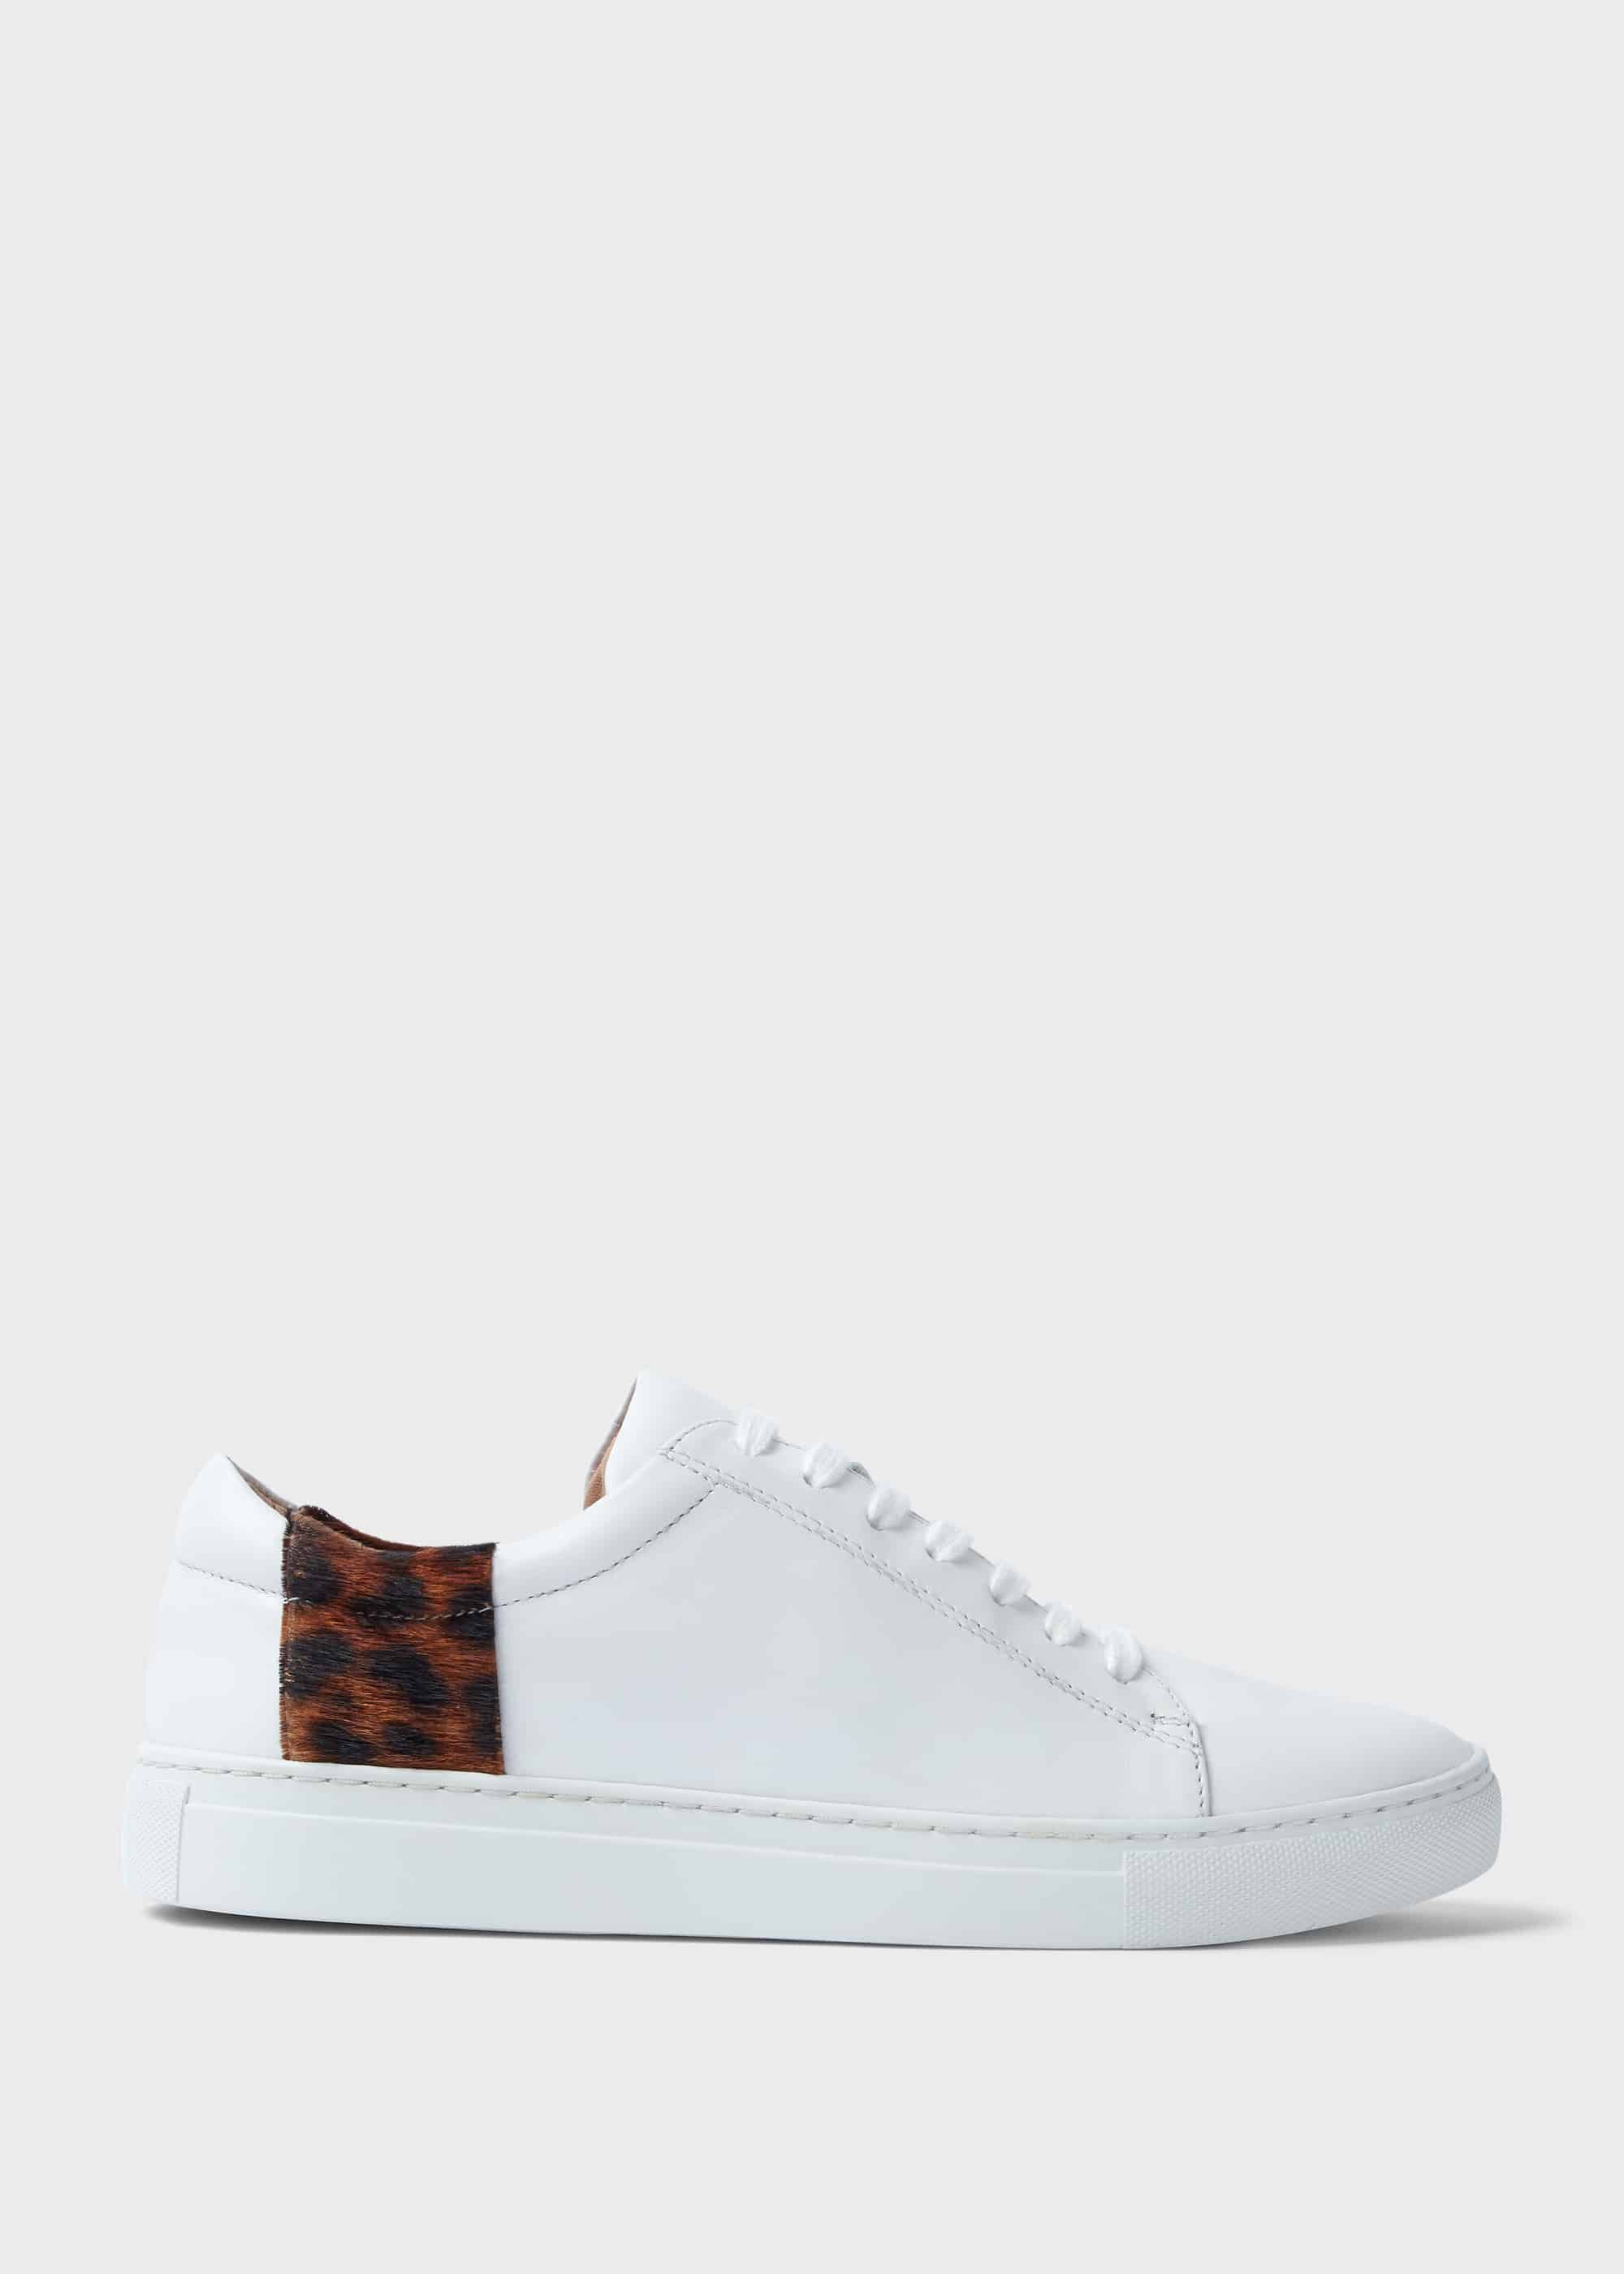 hobbs leopard print shoes